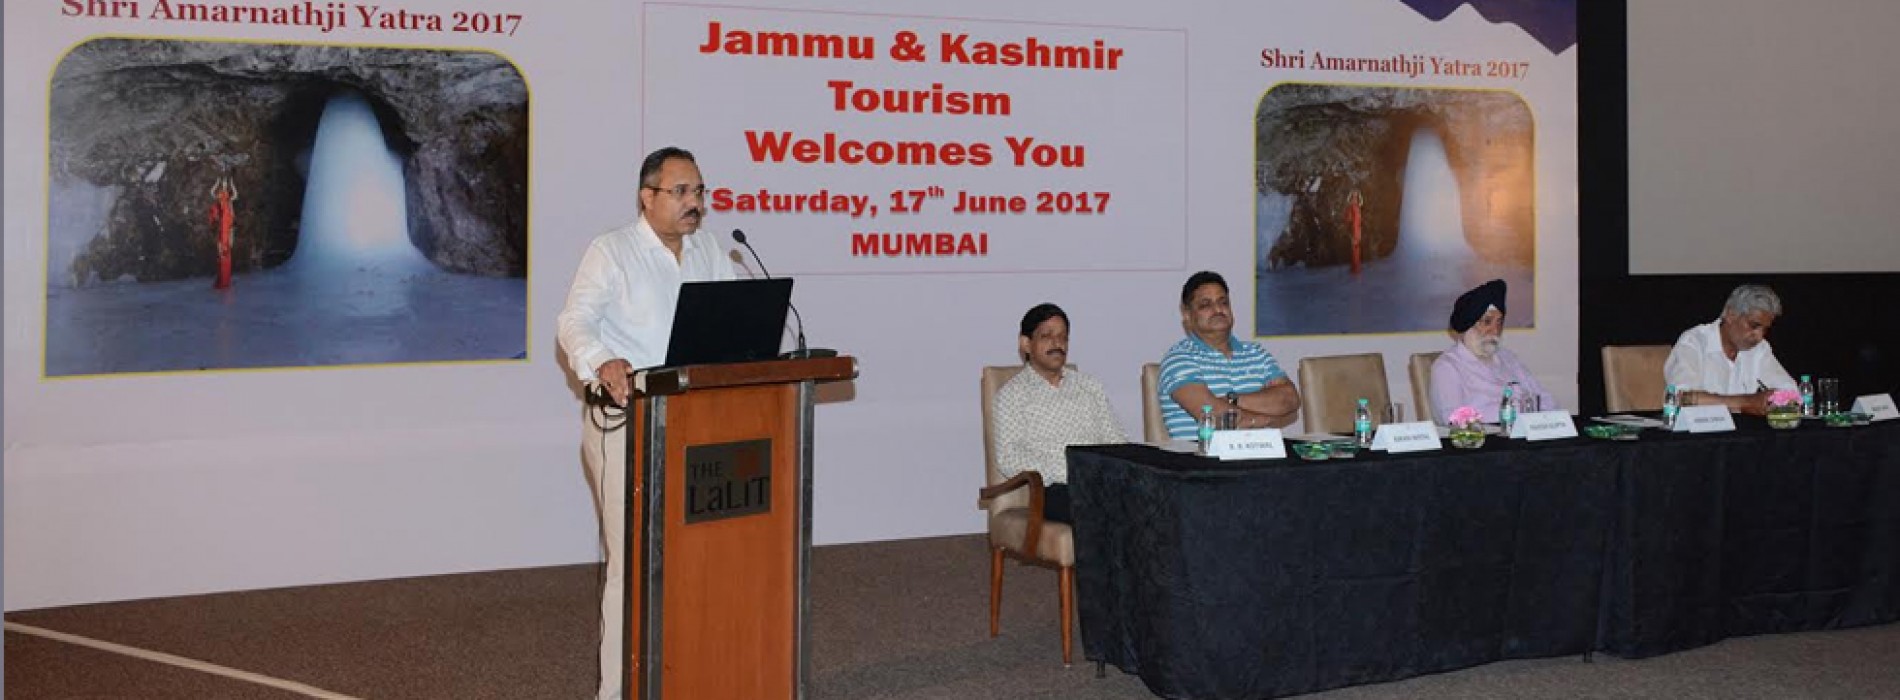 Jammu & Kashmir Tourism and Tourism Stakeholders of J&K focuses on Shri Amarnathji Yatra 2017